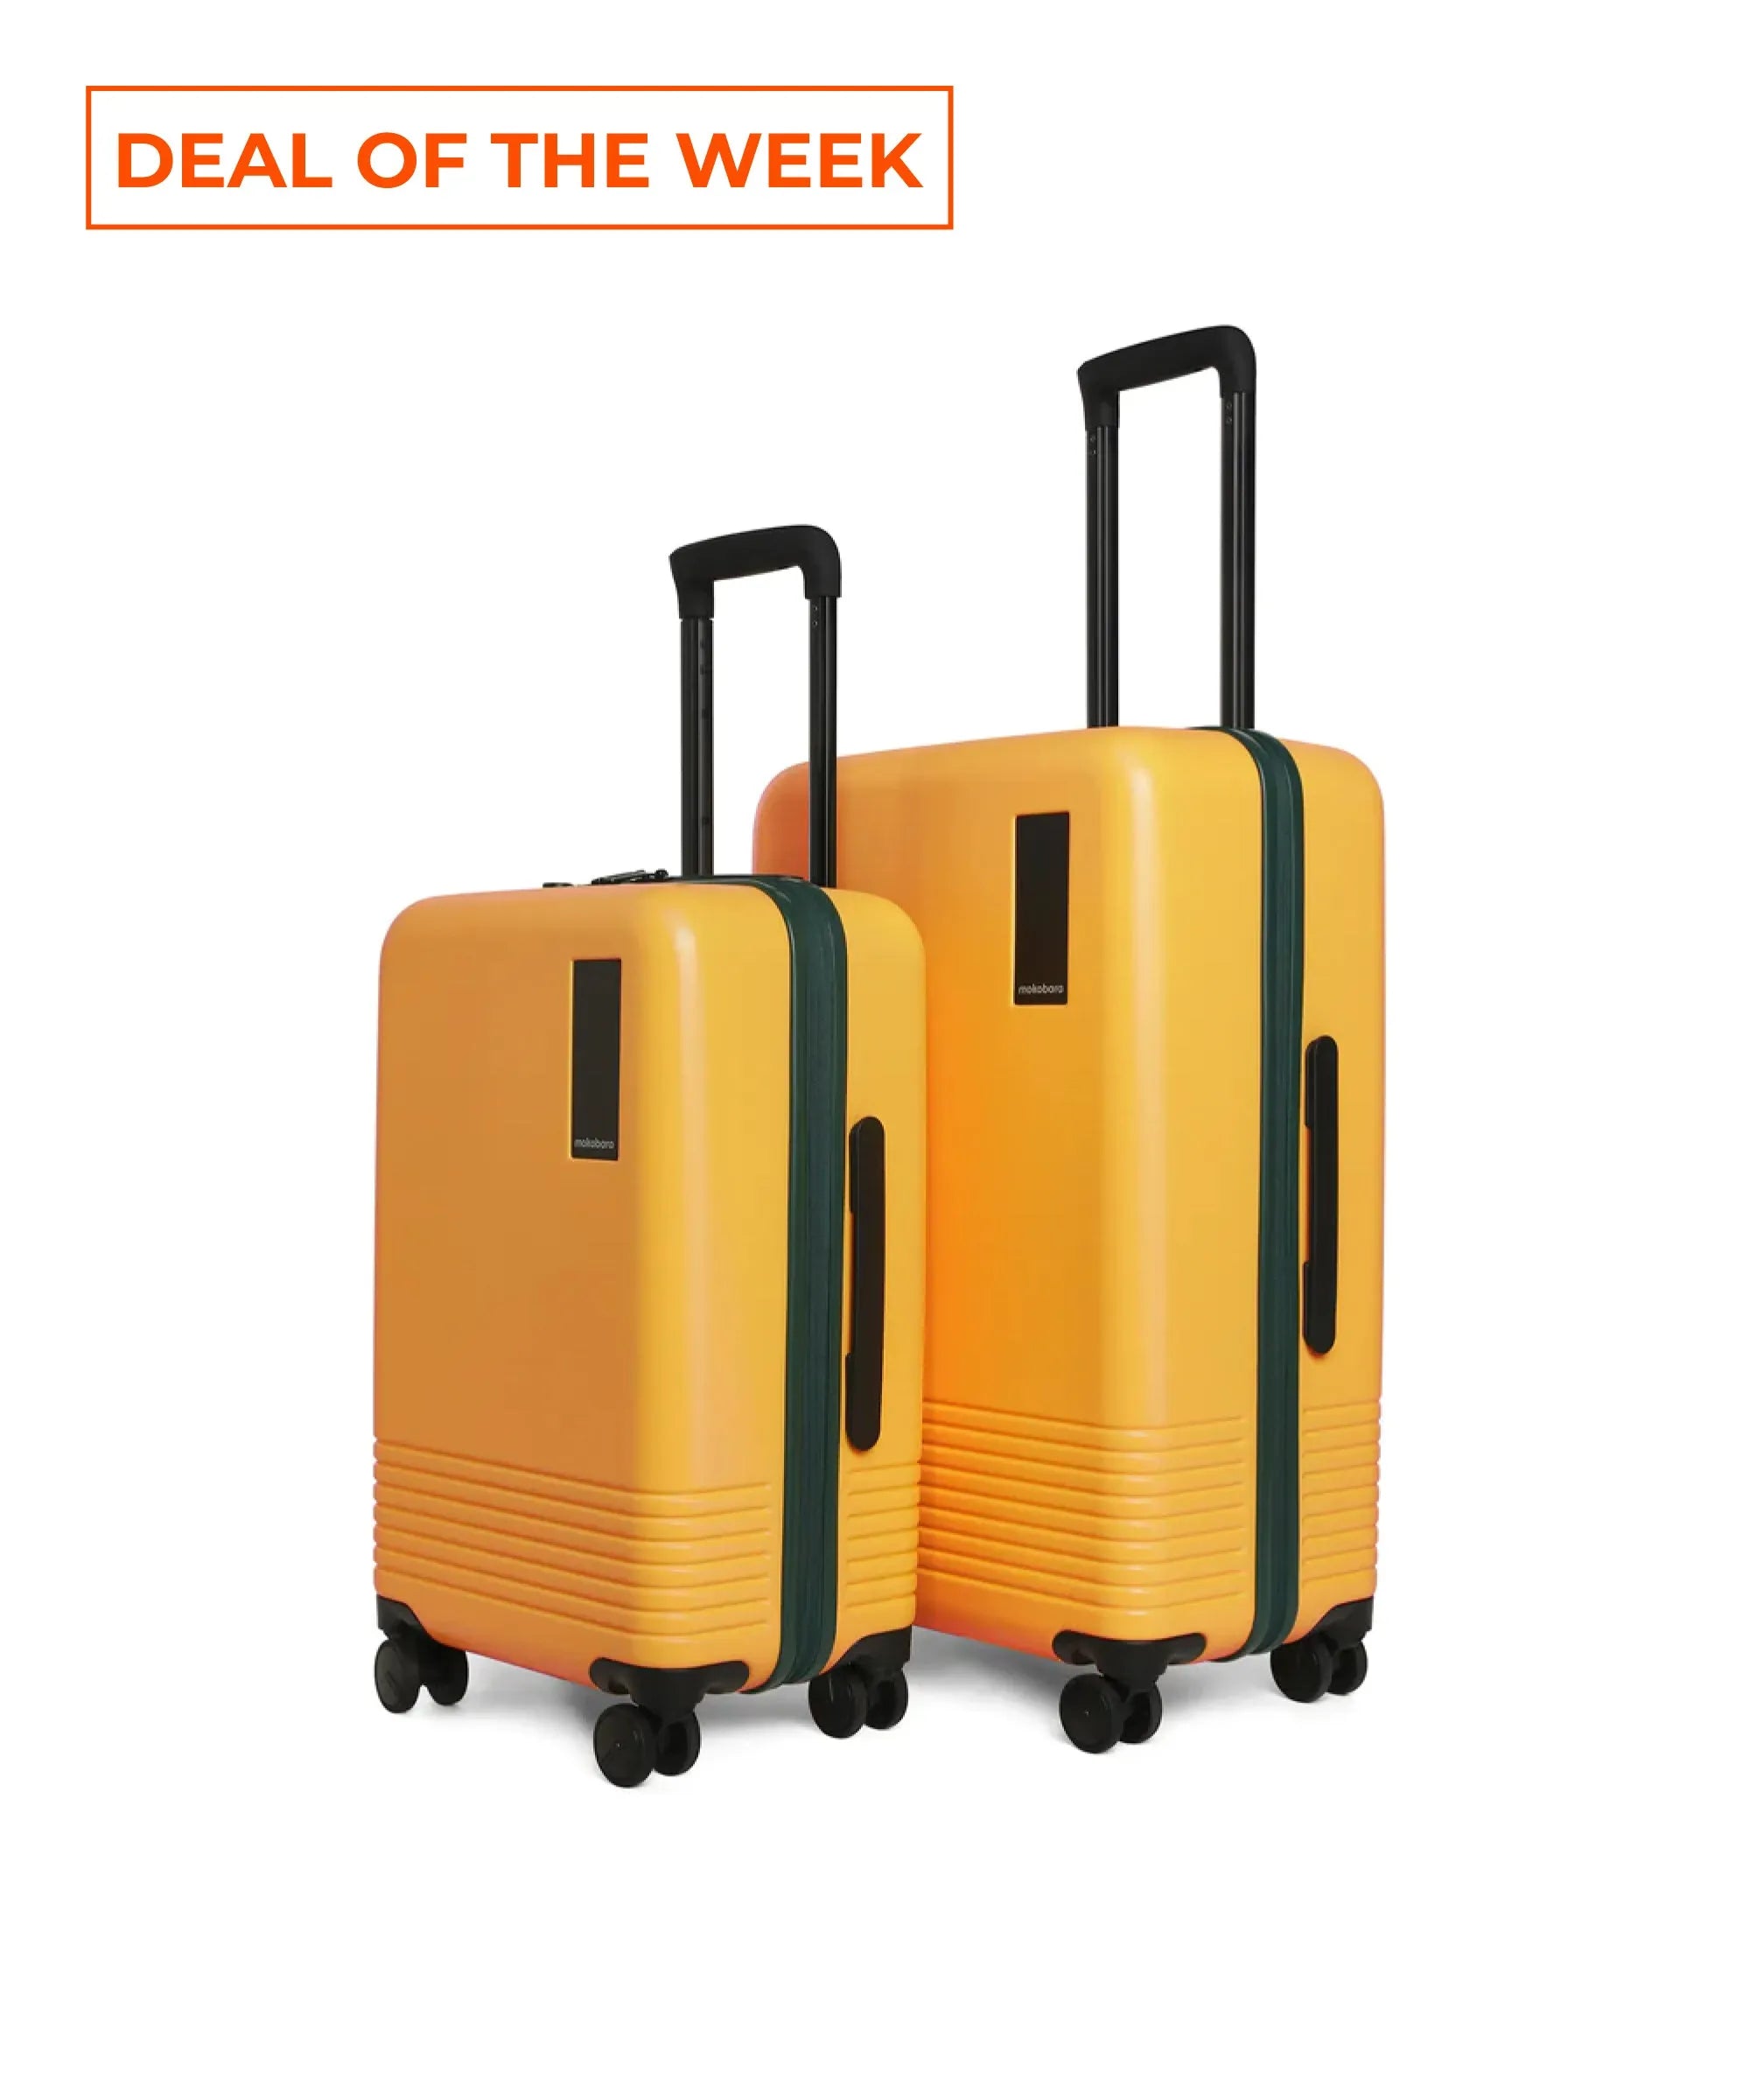 The Set of 2 Luggage